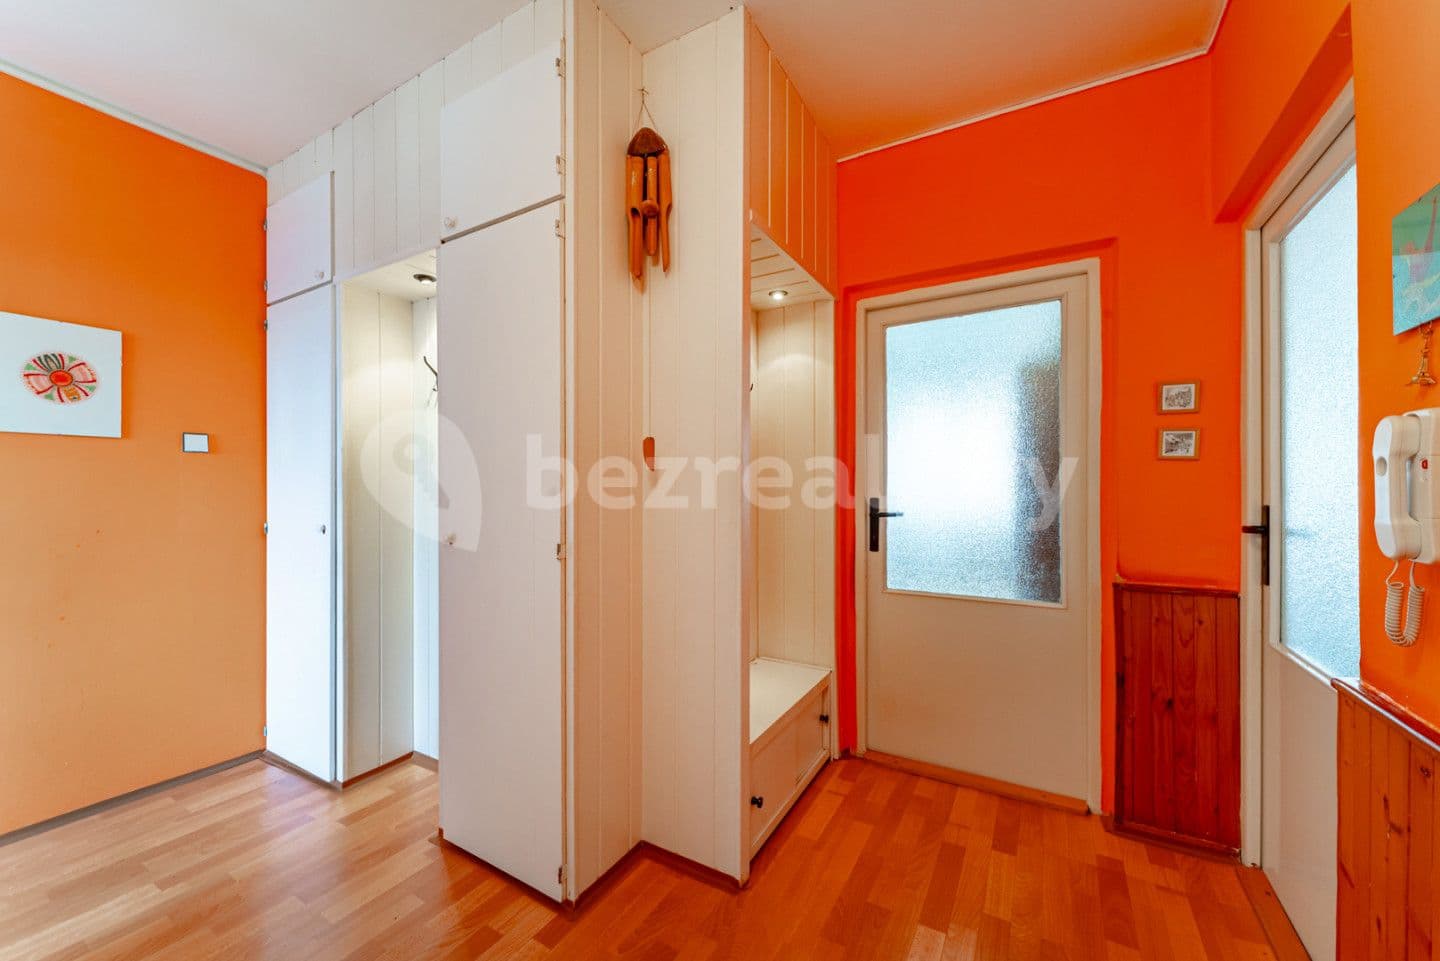 2 bedroom flat for sale, 61 m², Stavbařů, Cheb, Karlovarský Region